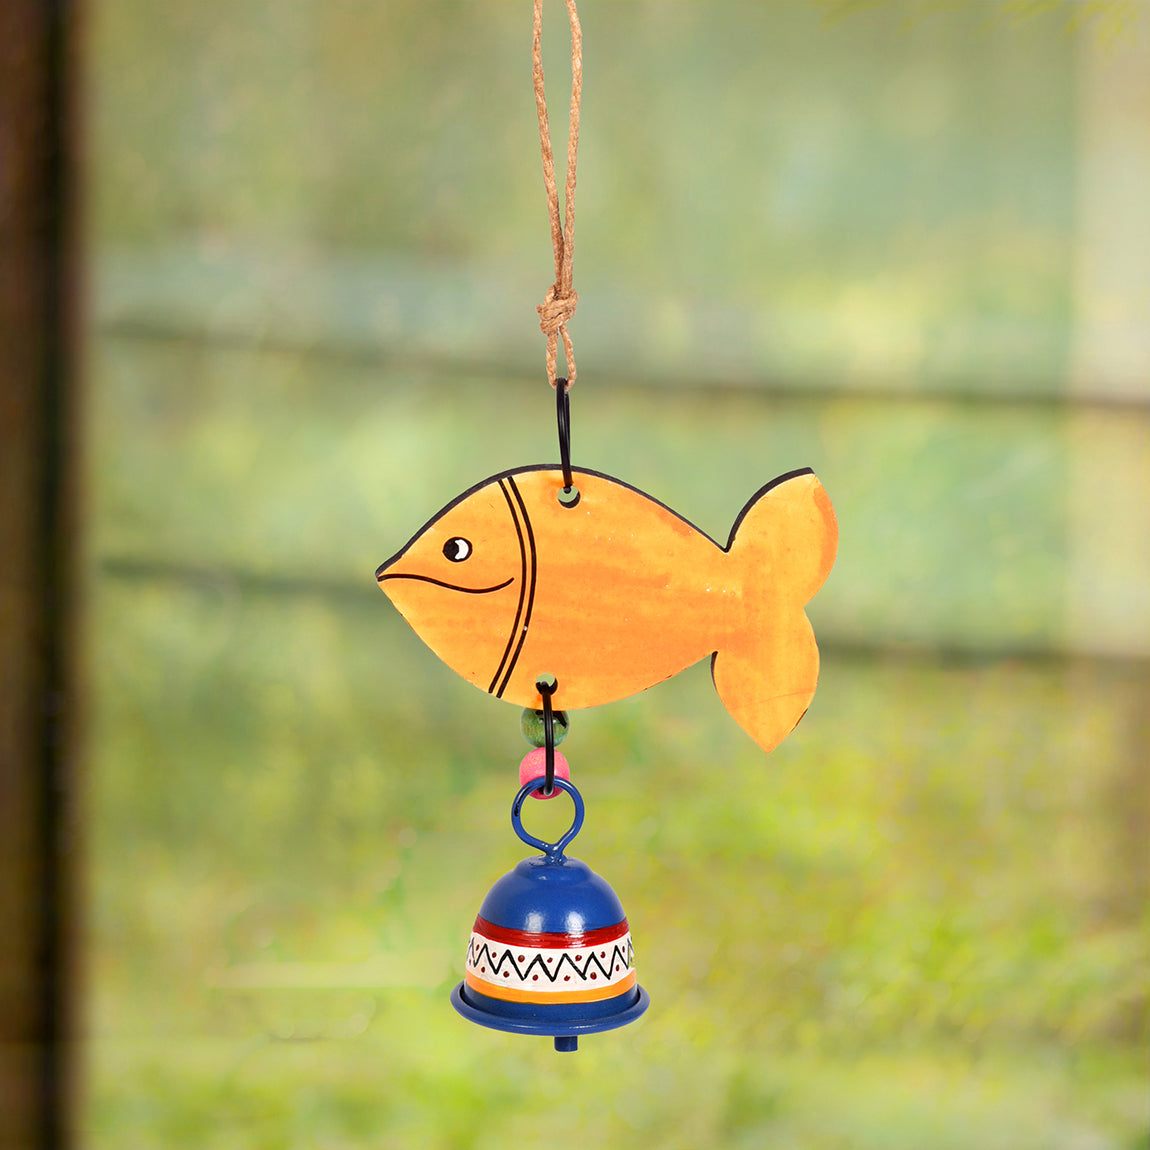 Handpainted Orange Fish Wind Chimes for Home Decorative (Multicolour)